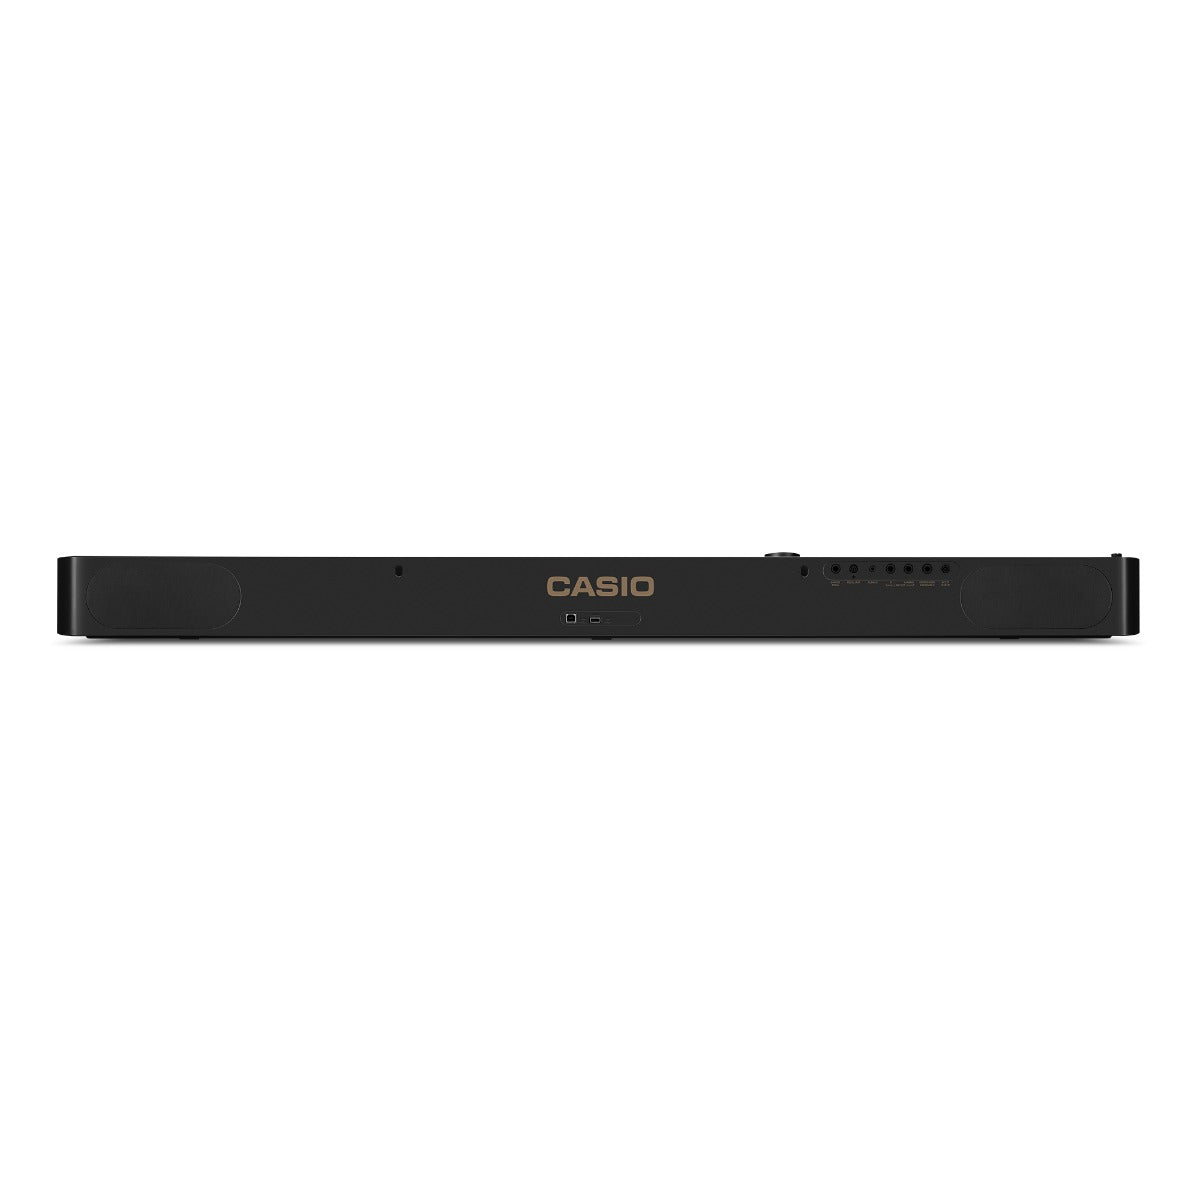 Casio PX-S3100 Digital Piano - Black, View 6